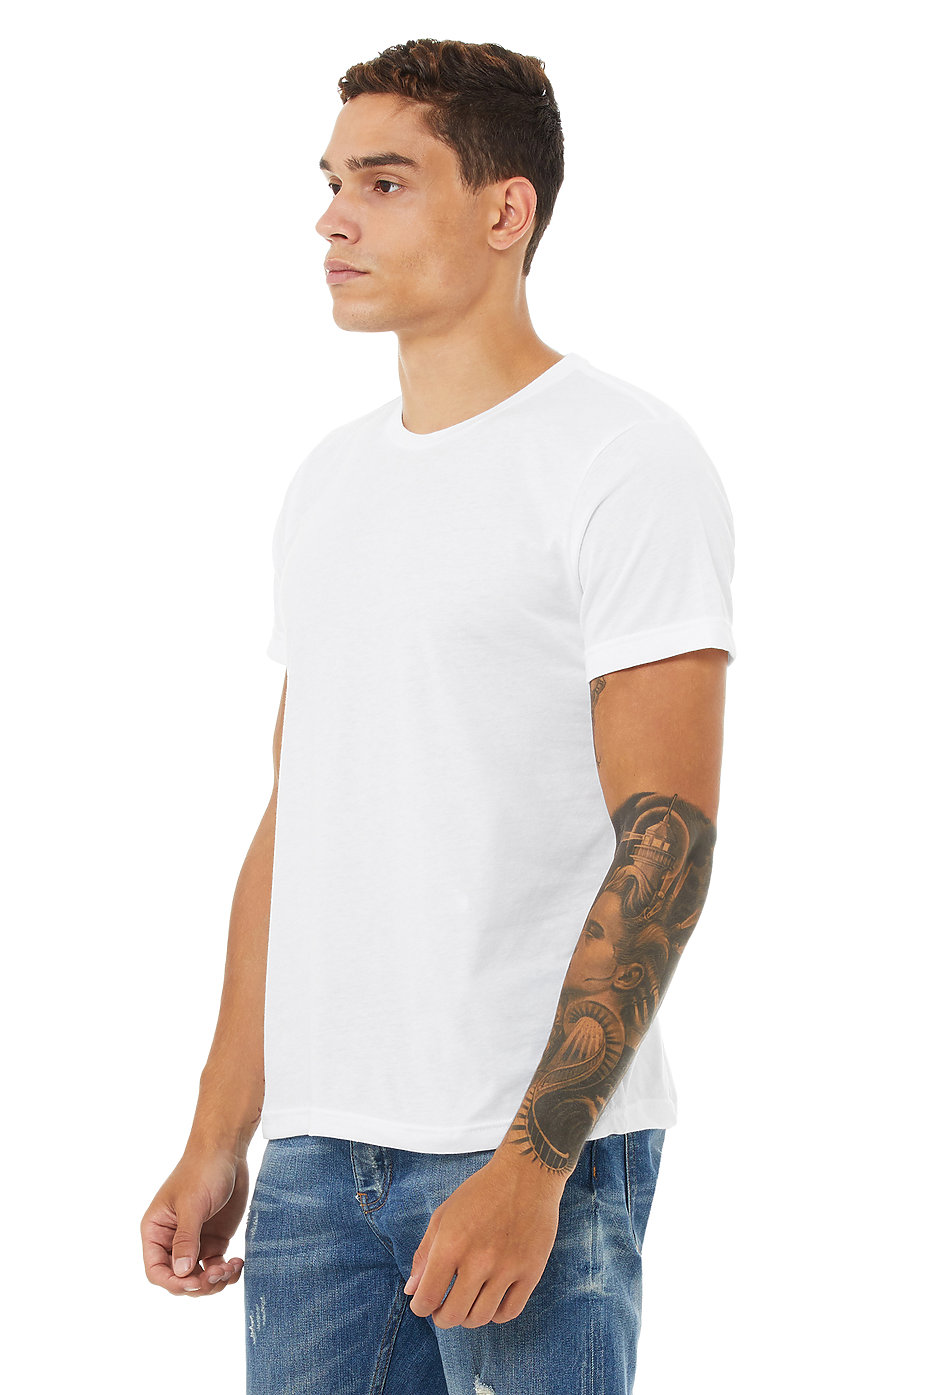 WHITE MARBLE Bella Canvas Unisex Poly-Cotton Short-Sleeve T-Shirt 2XL 